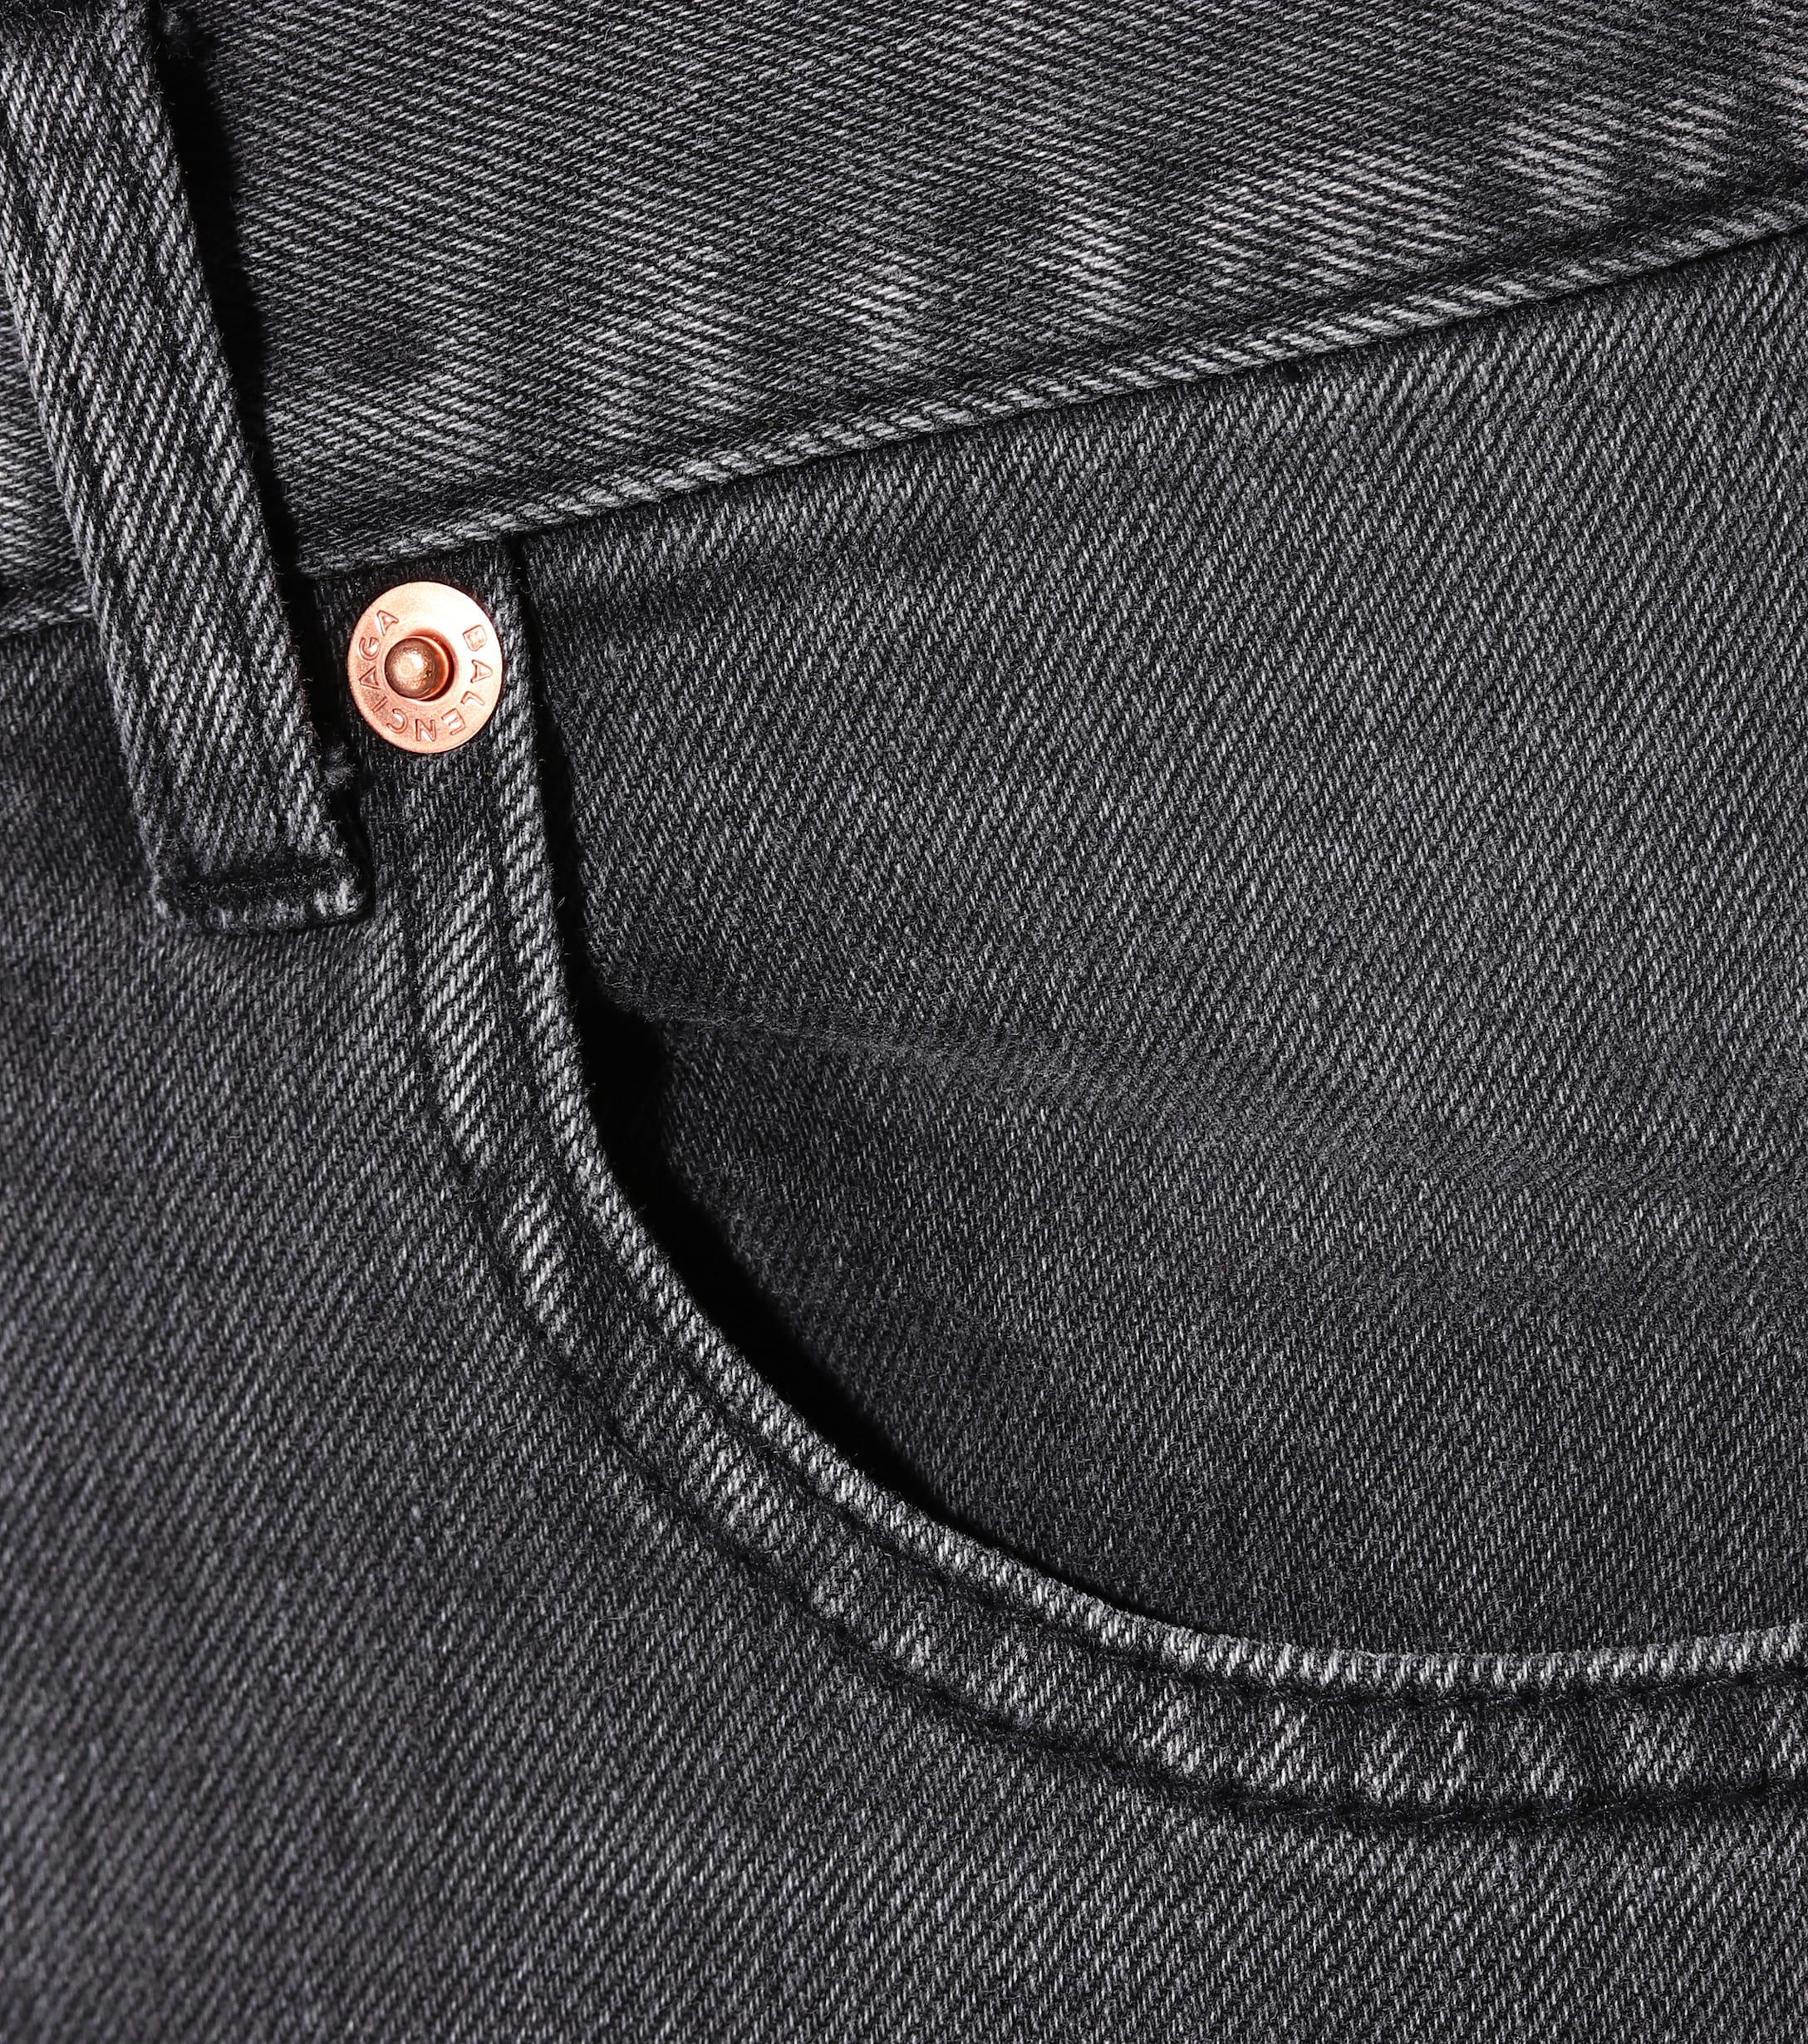 Balenciaga Denim Ripped Skinny Jeans in Gray - Lyst